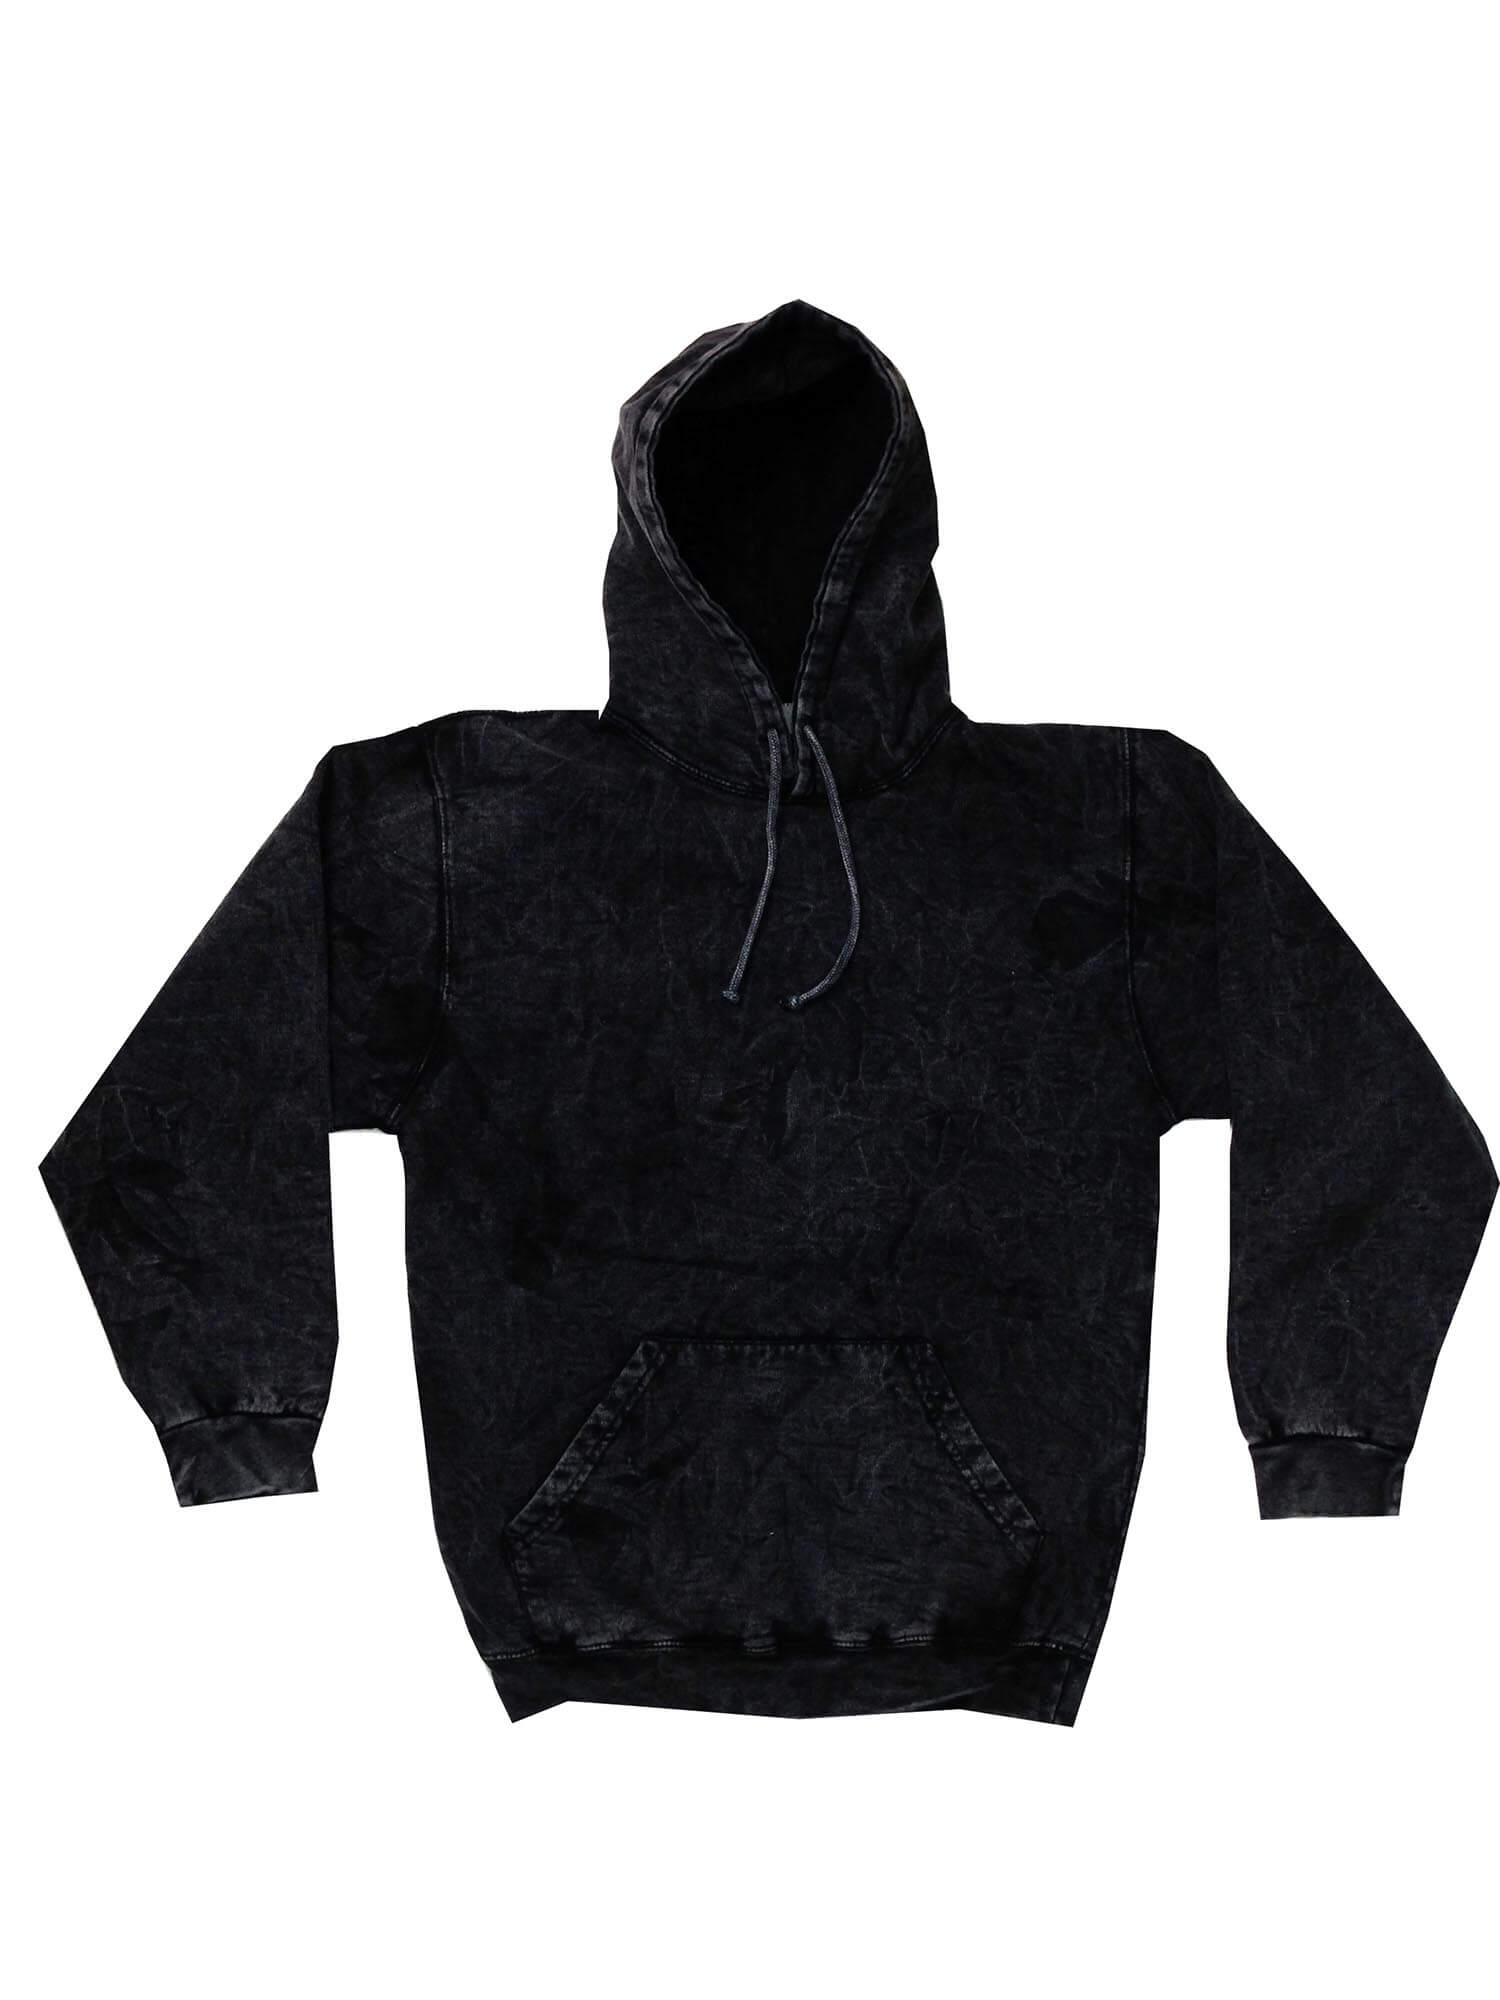 black-vintage-mineral-wash-hoodies-adult-zandy-s-bargains